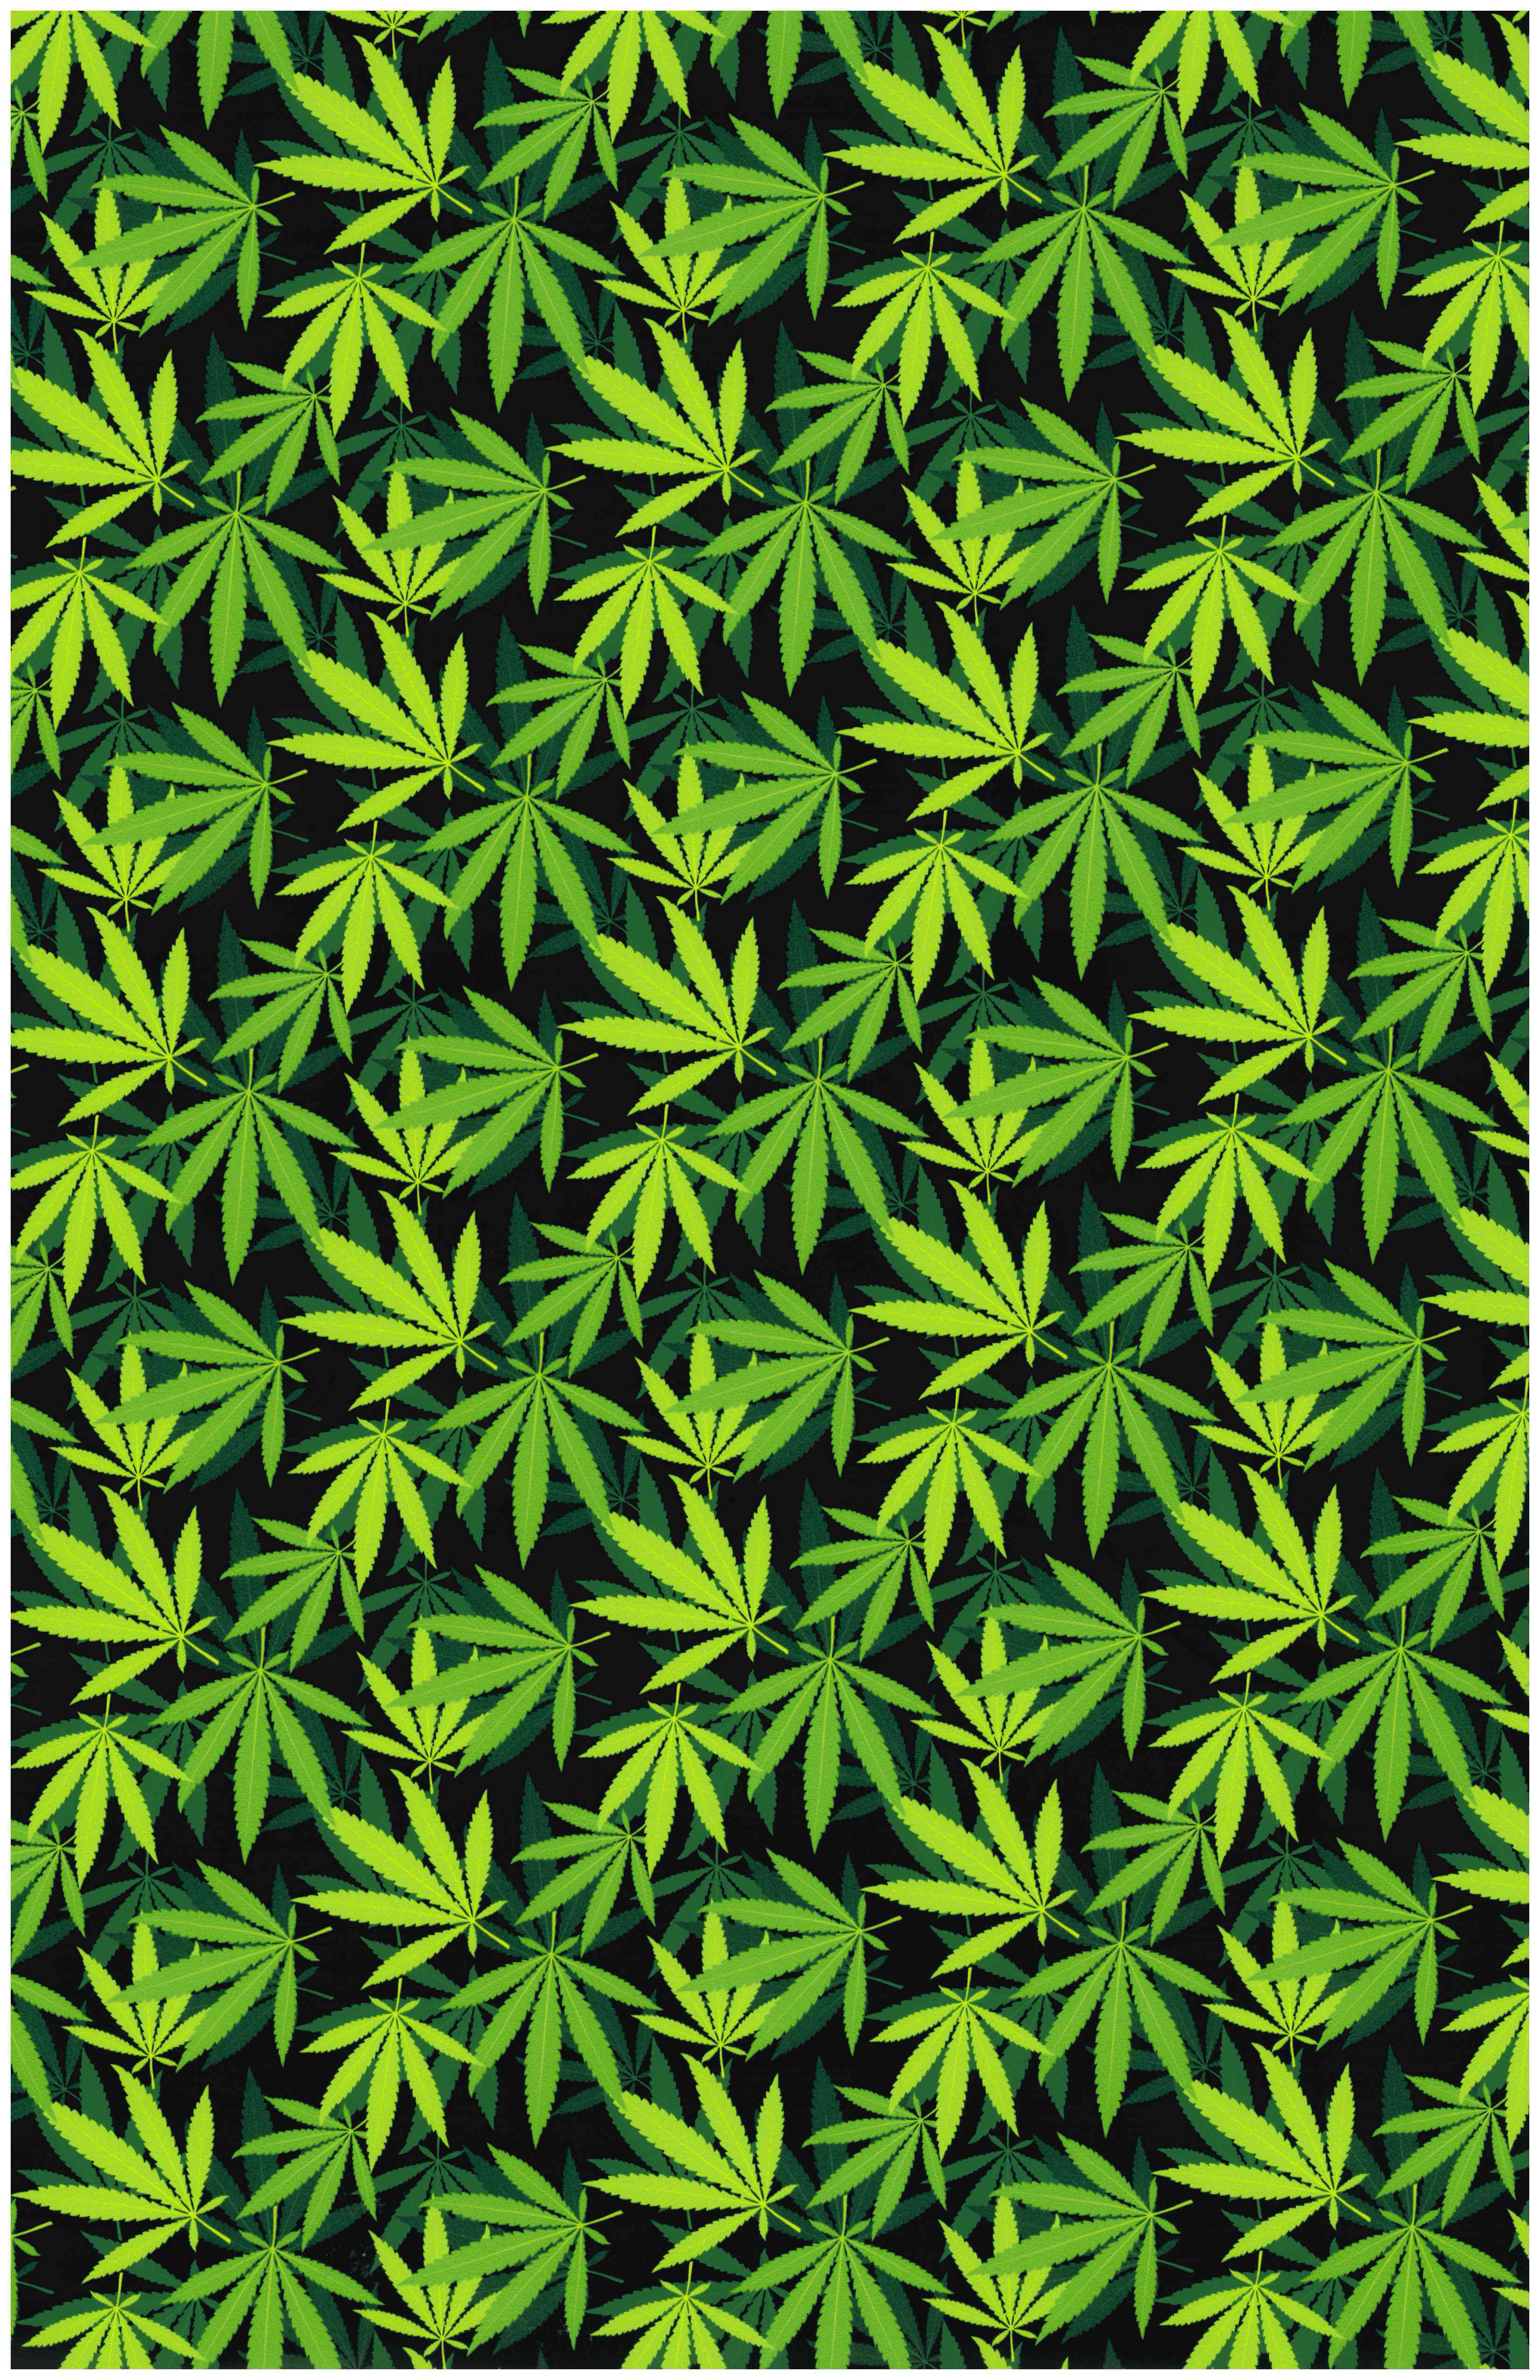 SpecialtyPSV Fashion Patterns - PSV-HMP GRN - Green Marijuana